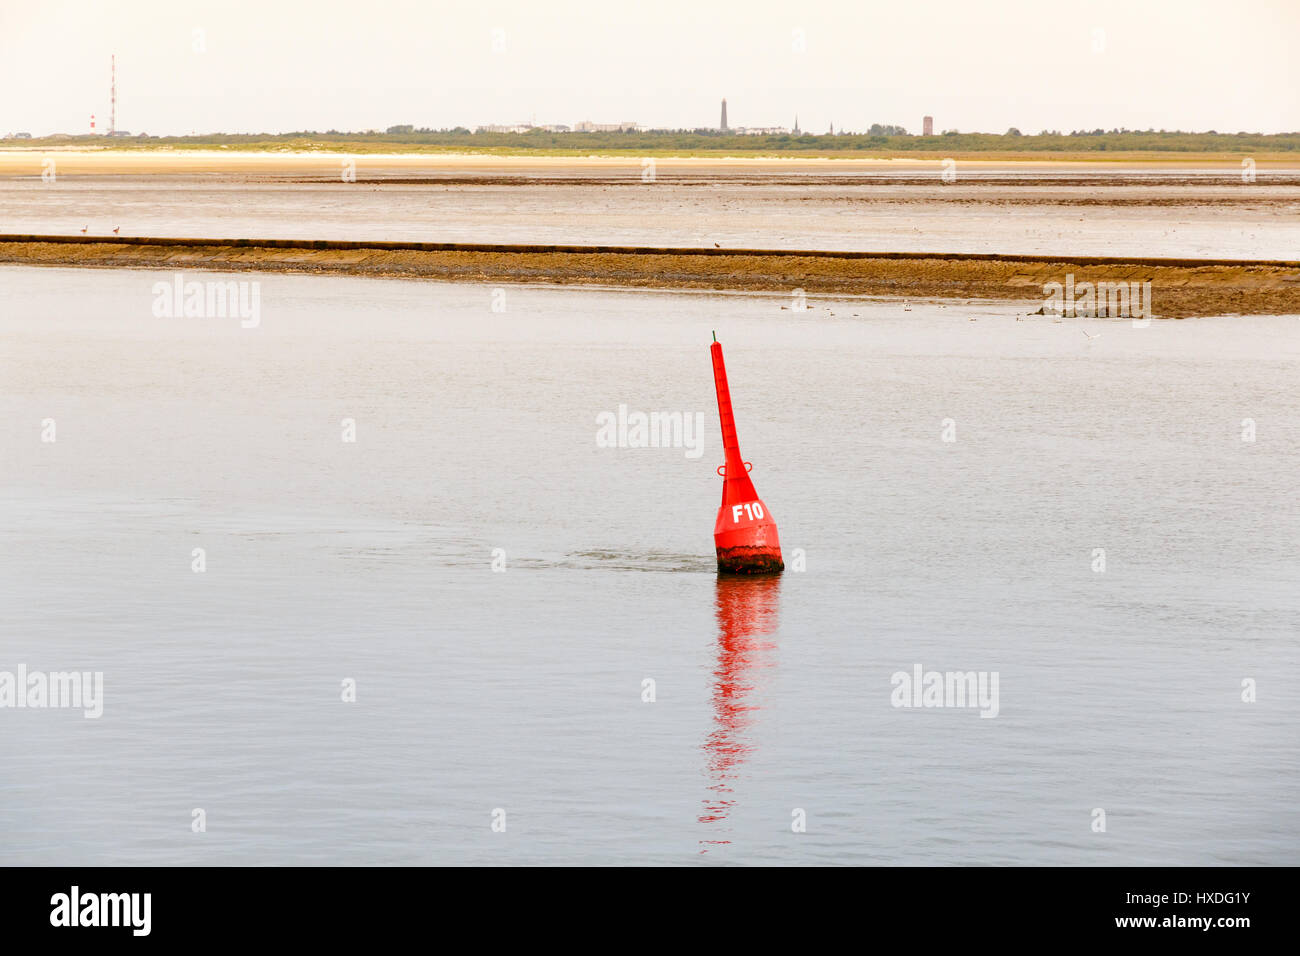 A red sea buoy off the coast of the German island of Borkum Stock Photo